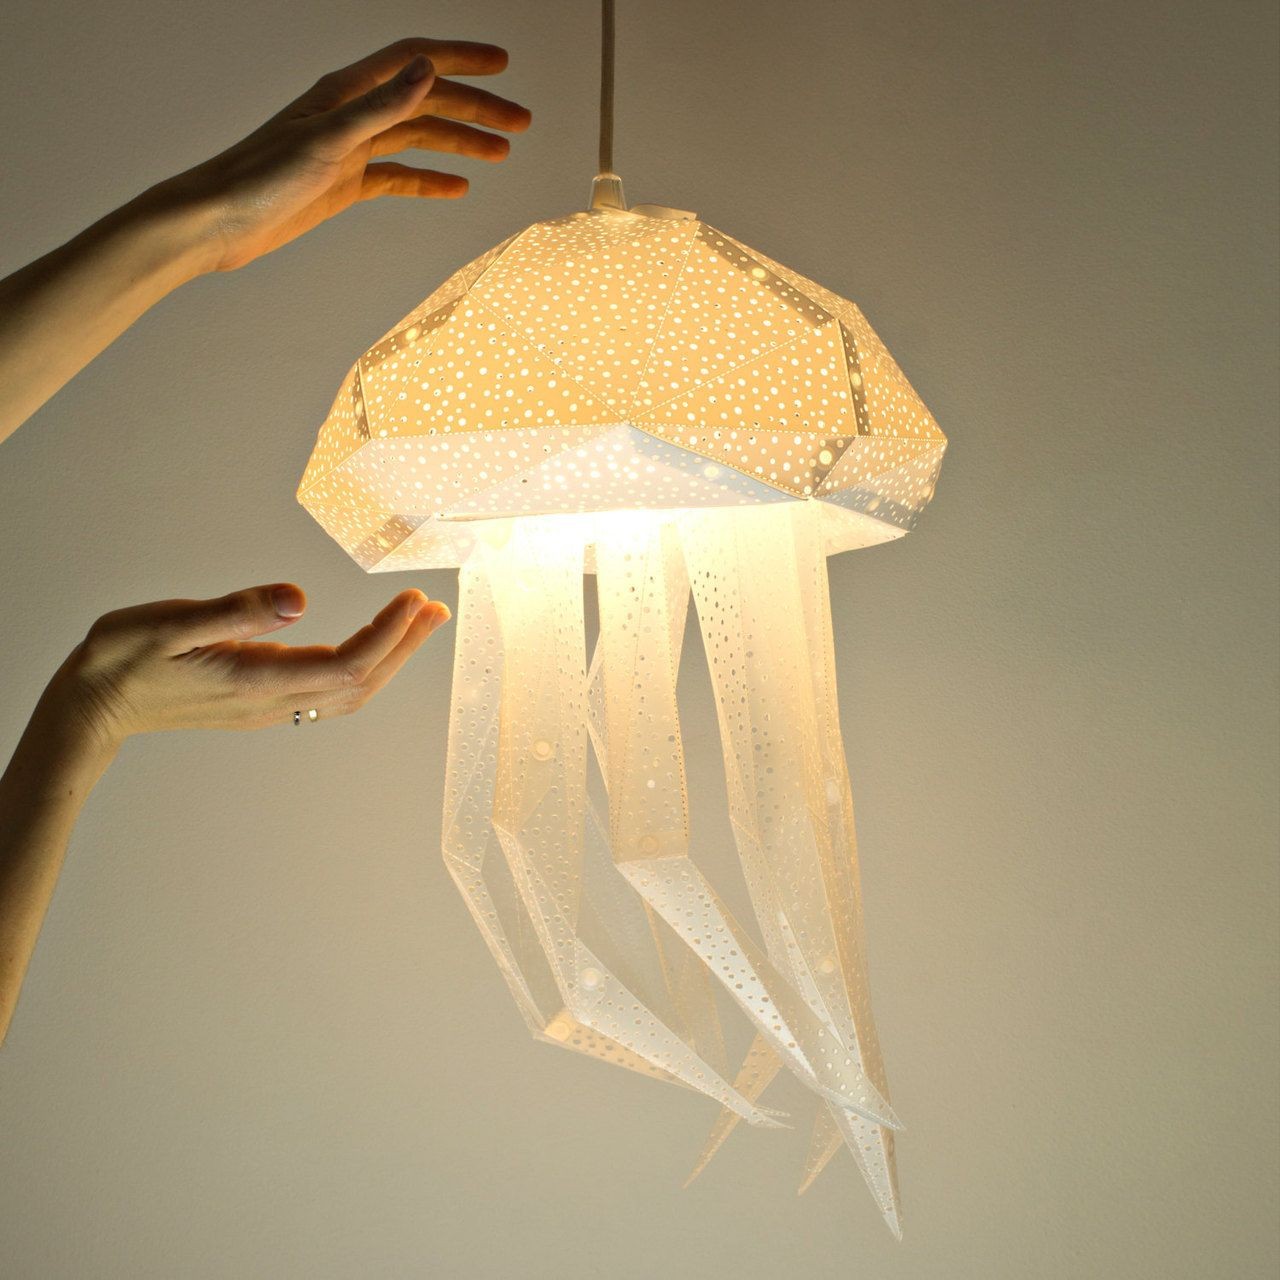 Papercraft Lantern Diy Papercraft Light Shades Of Aquatic Life by Vasili